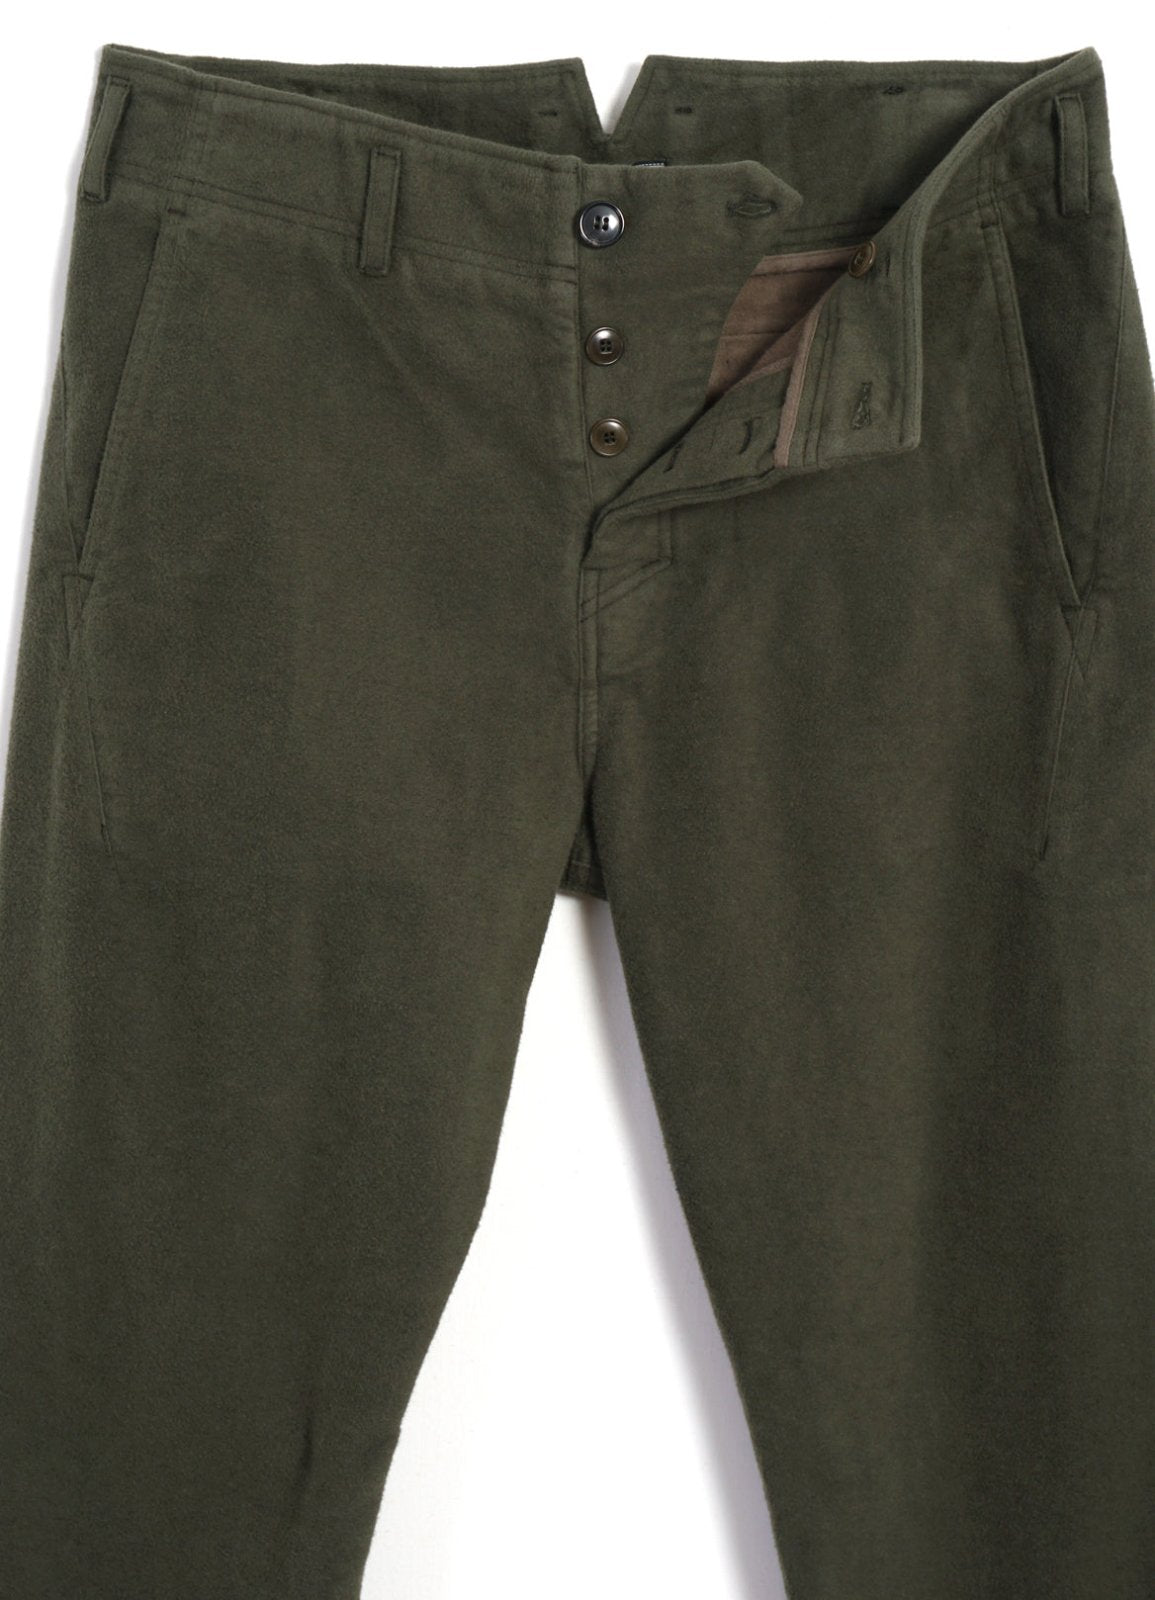 HANSEN GARMENTS - SVENNING | Slim Fit Trousers | Dark Green - HANSEN Garments